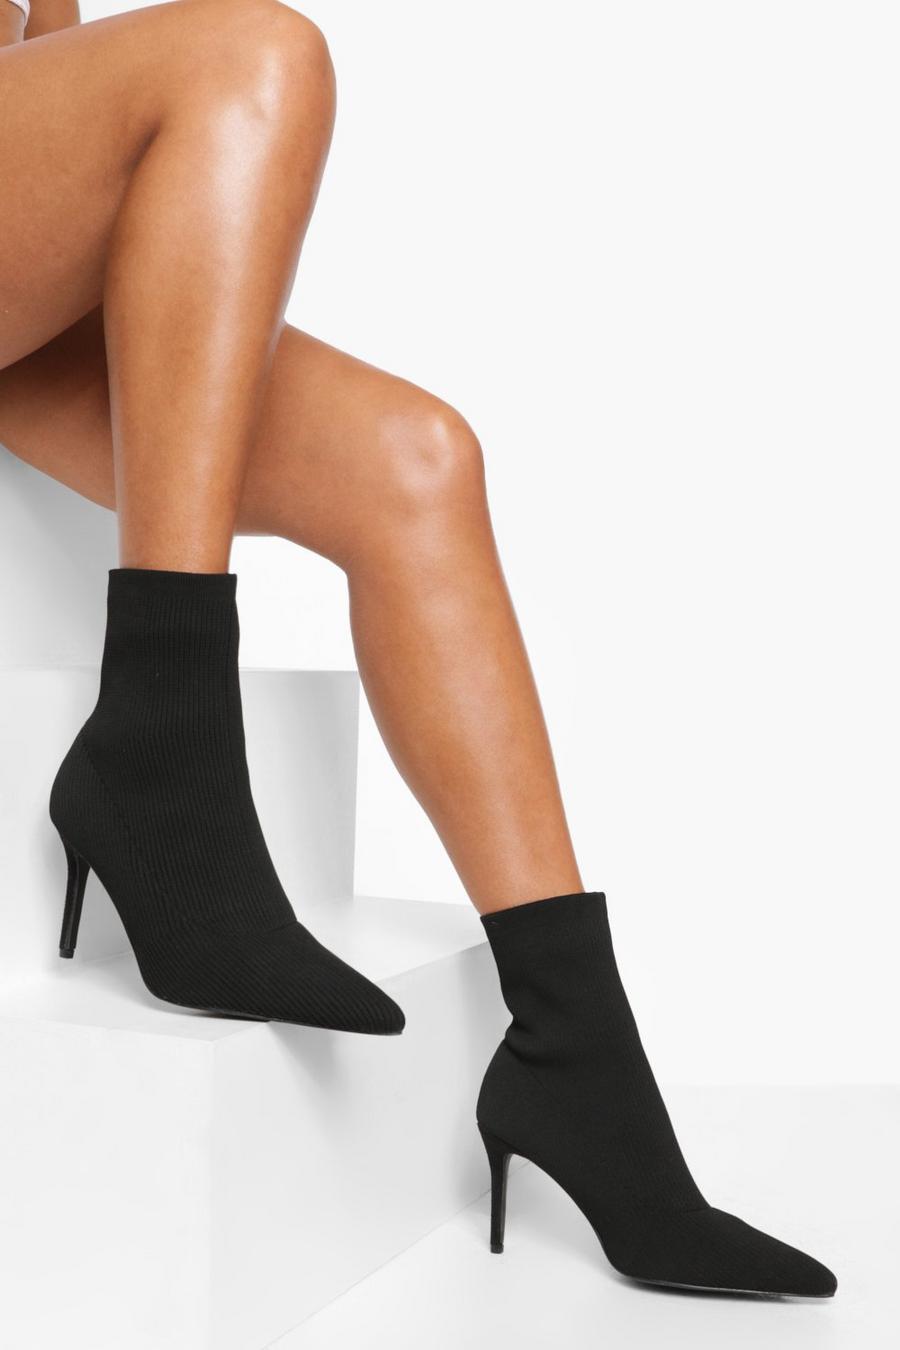 Botas estilo calcetín de holgura ancha de tela con tacón de aguja, Black nero